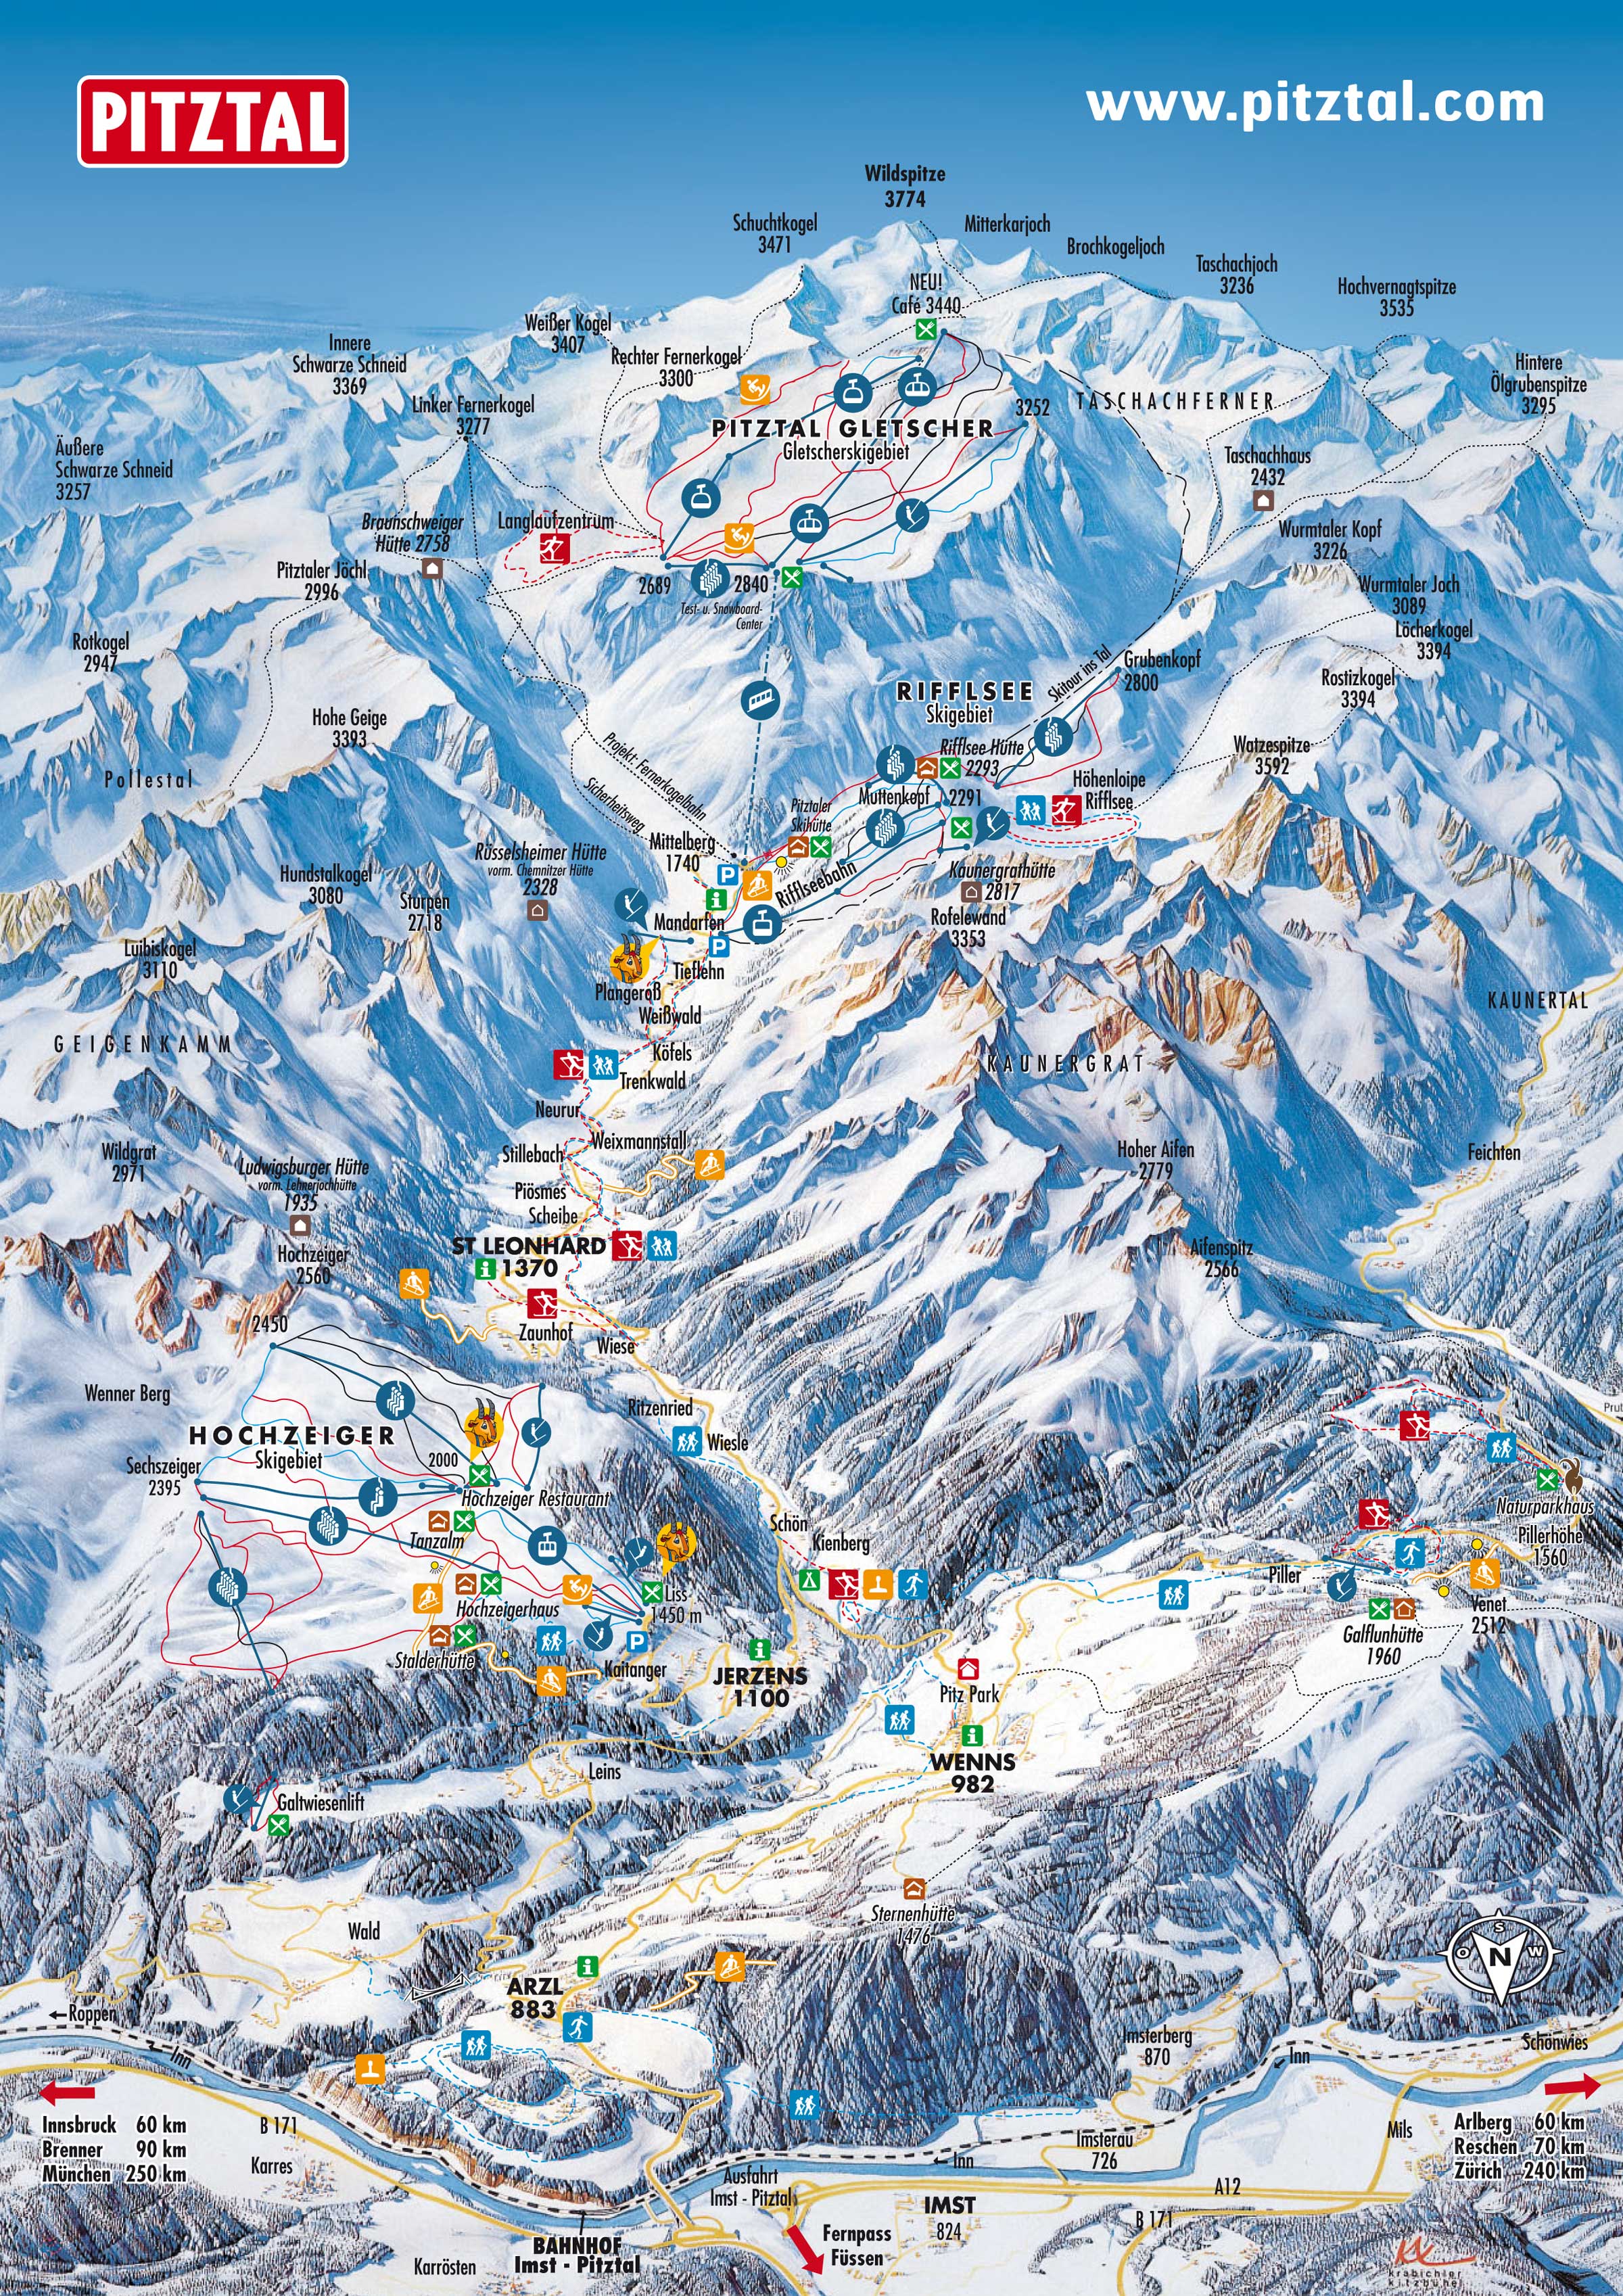 https://skitours.com.ua/sites/default/files/images/resorts/Austria/Pitztal/PitztalMap.jpg